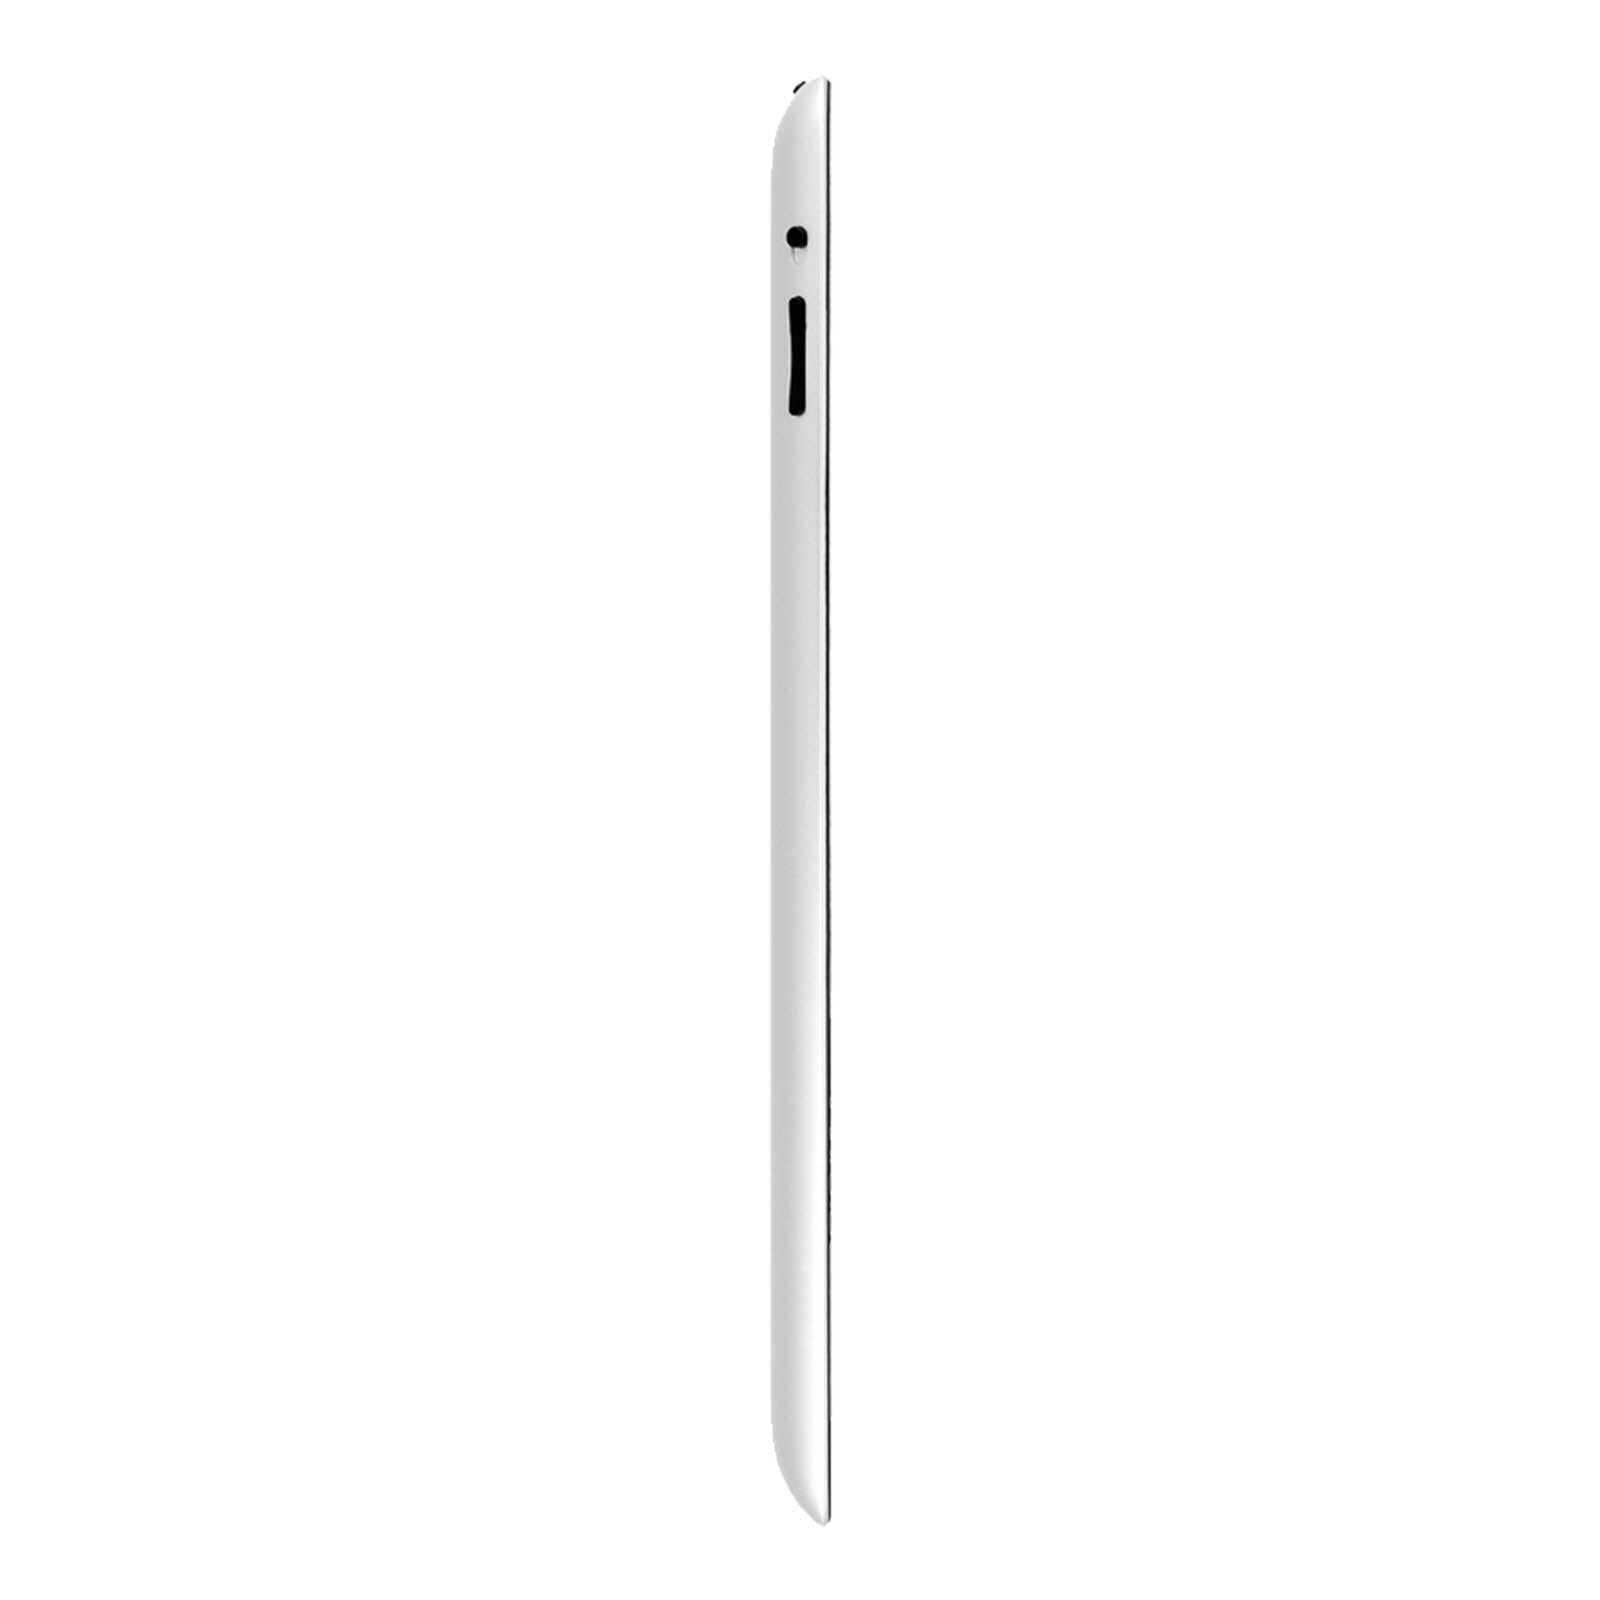 Apple iPad 3 64GB Black Pristine - WiFI